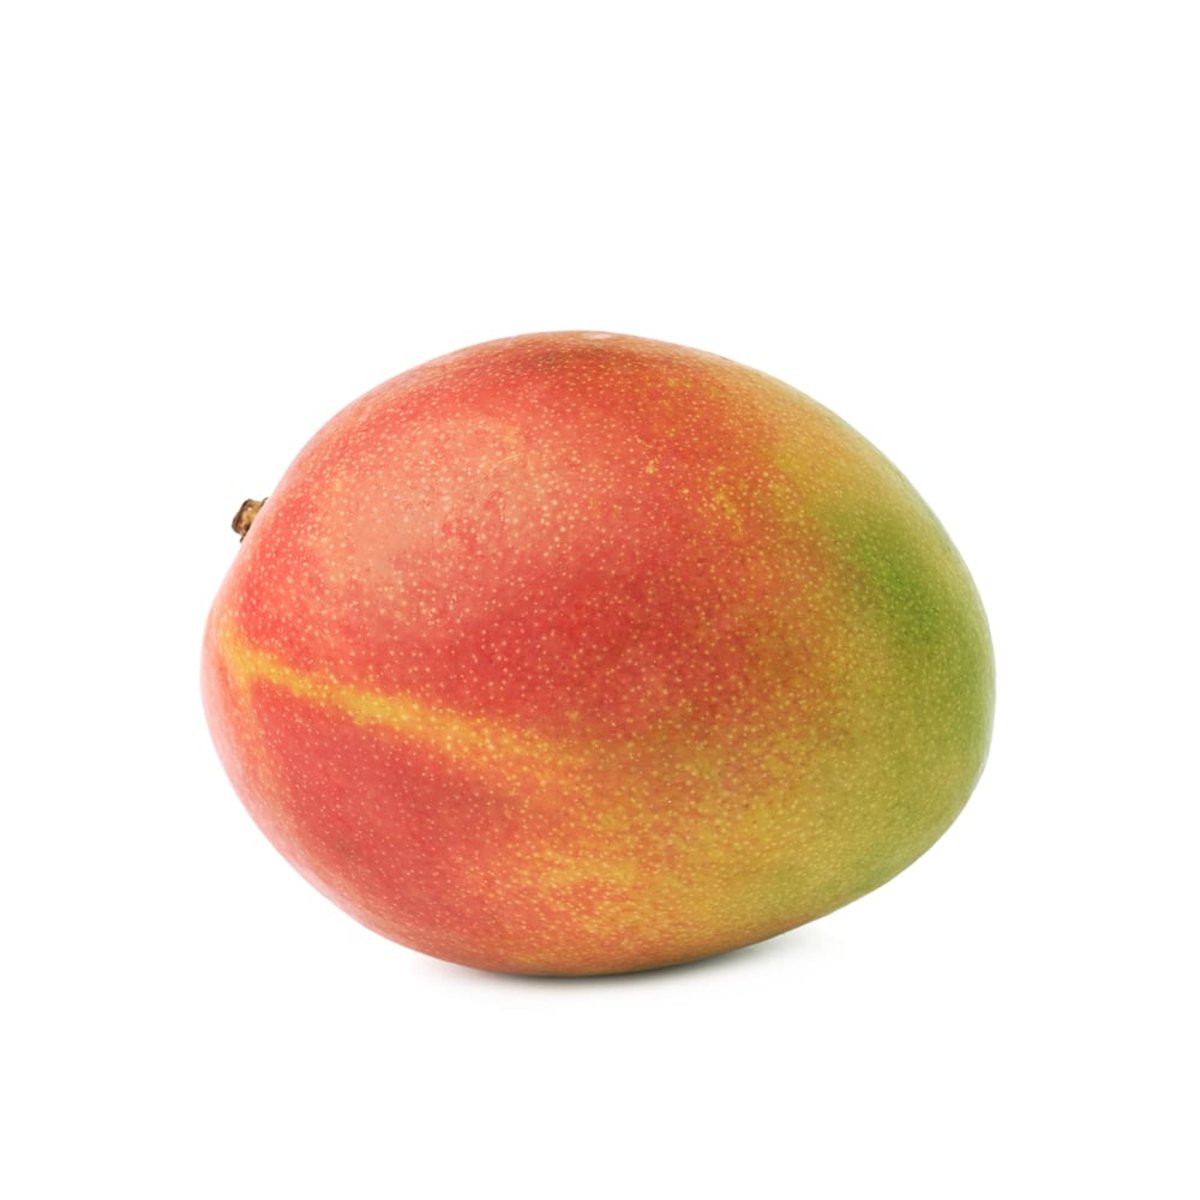 Mango k dozrání 1 ks